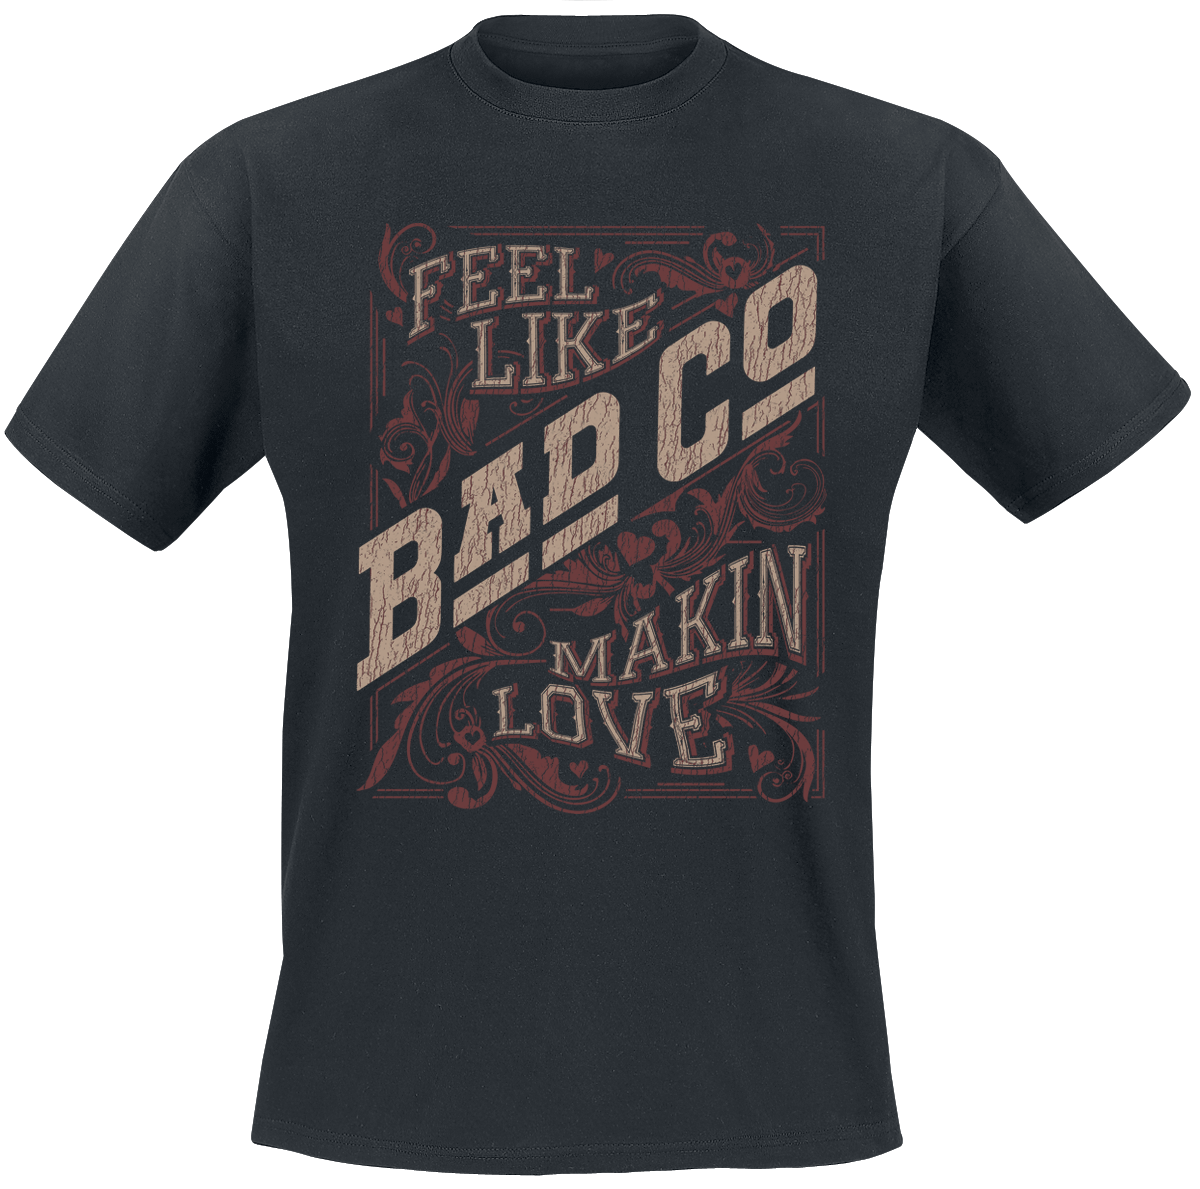 Bad Company - Makin Love - T-Shirt - schwarz - EMP Exklusiv!